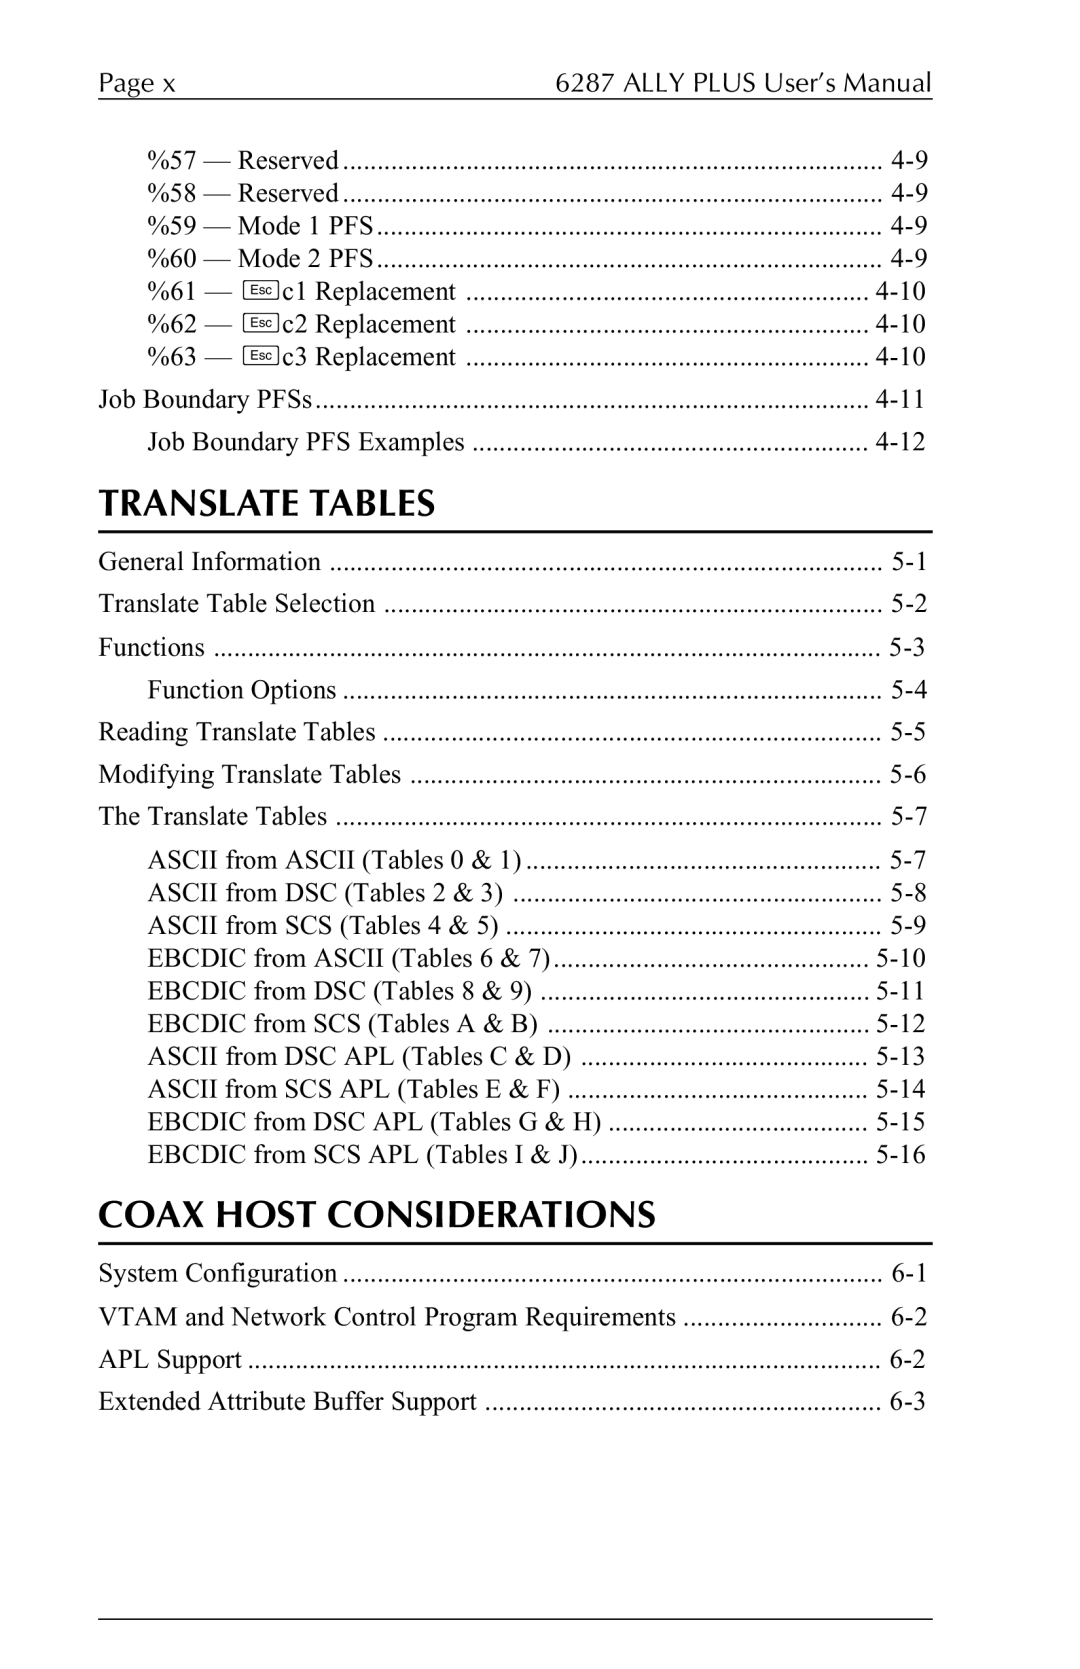 Xerox 6287 user manual Translate Tables 